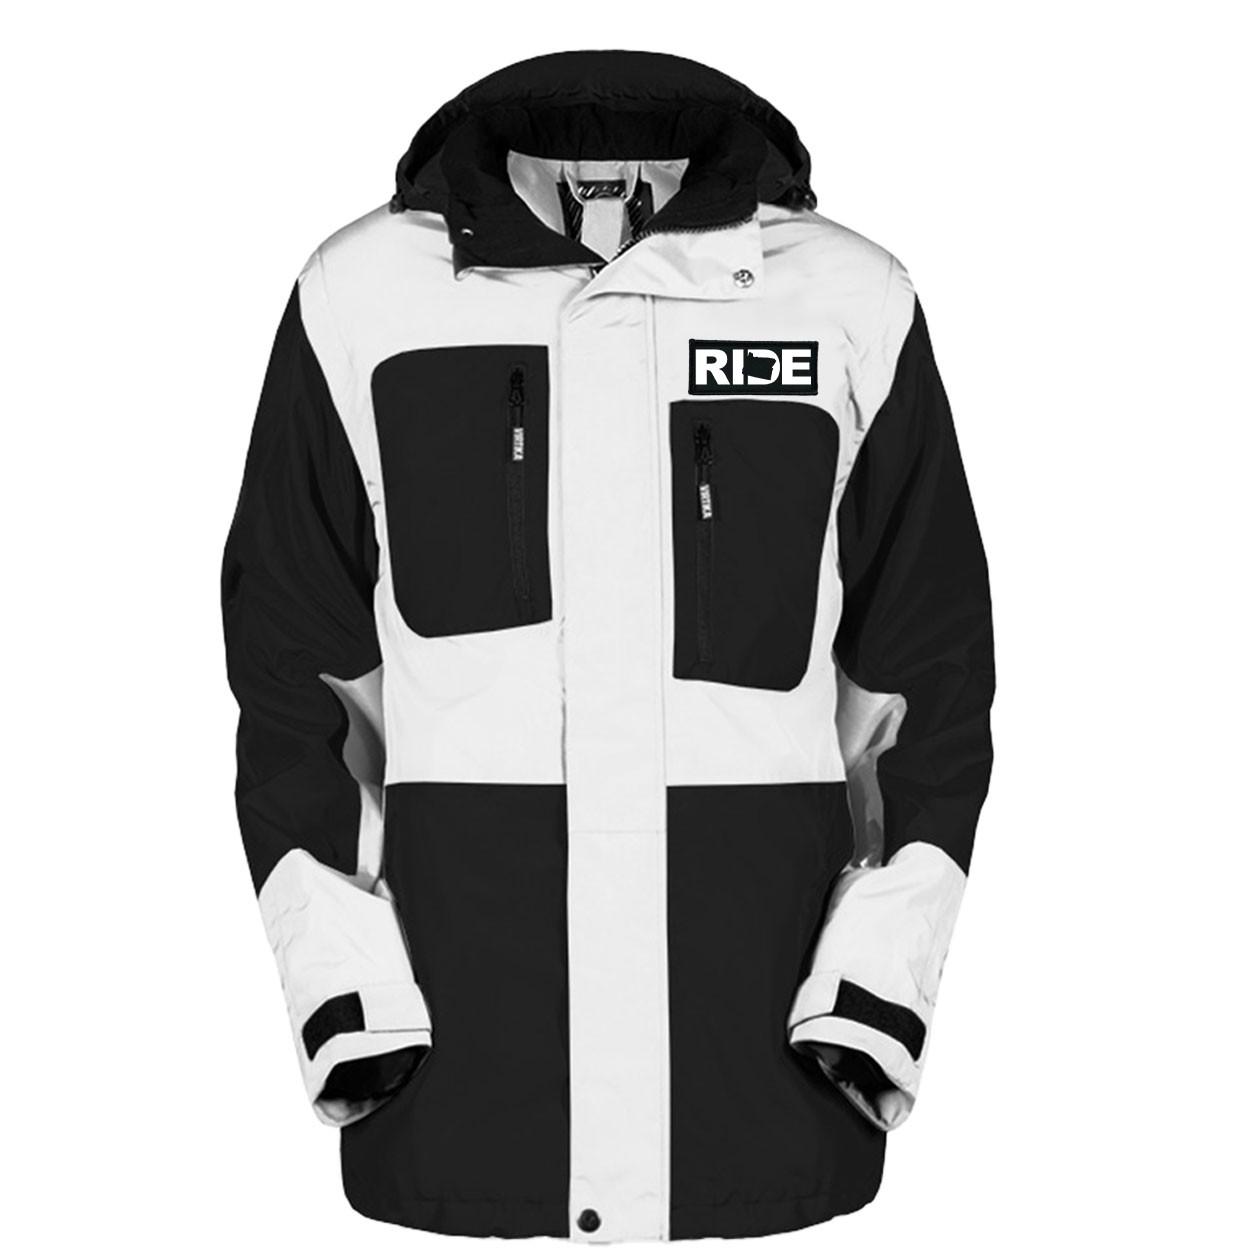 Ride Oregon Pro Waterproof Breathable Winter Virtika Jacket Black/White (White Logo)